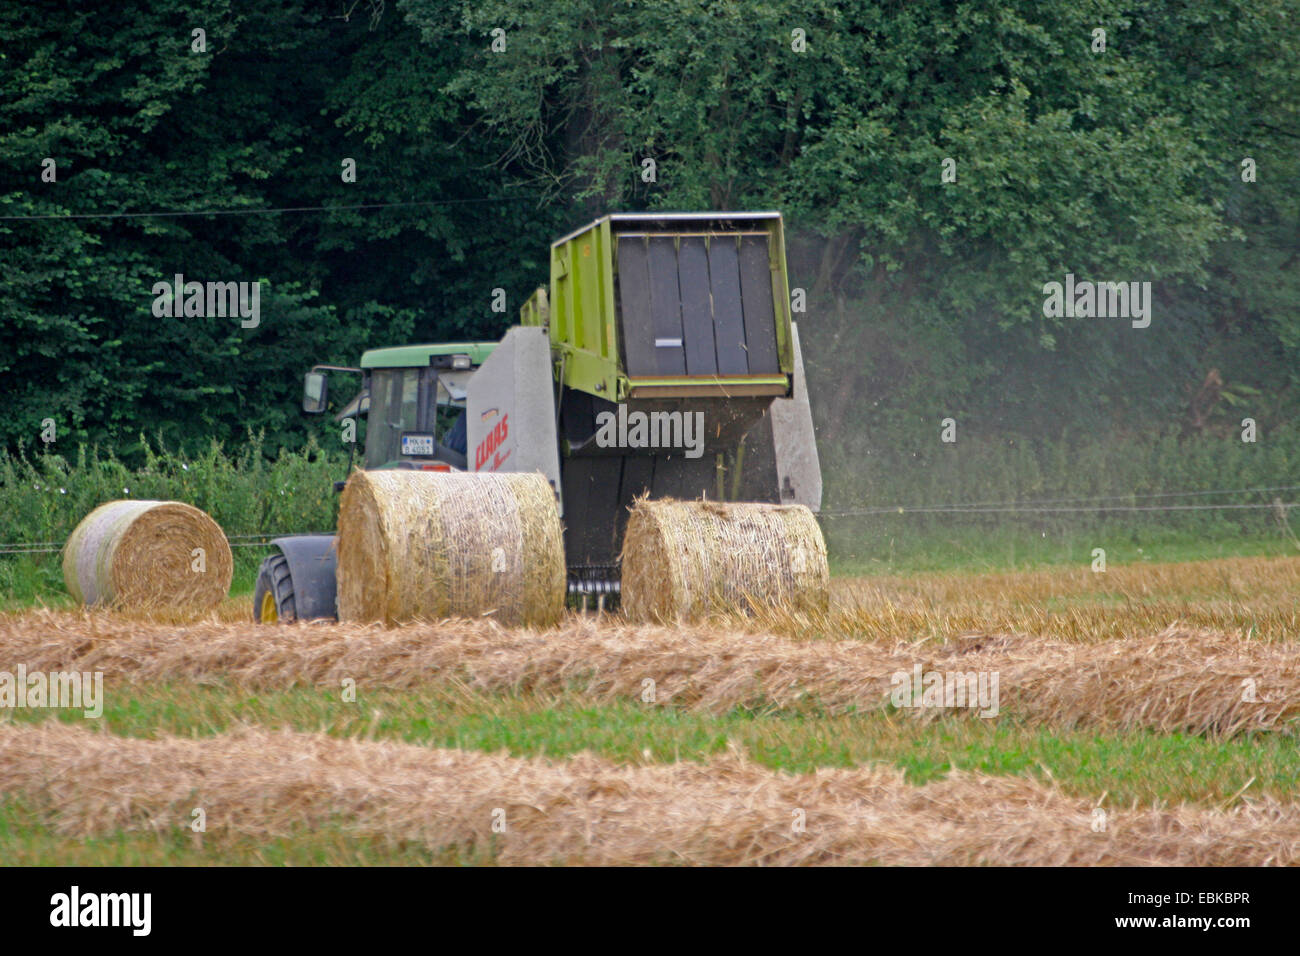 straw press on a field, Germany Stock Photo